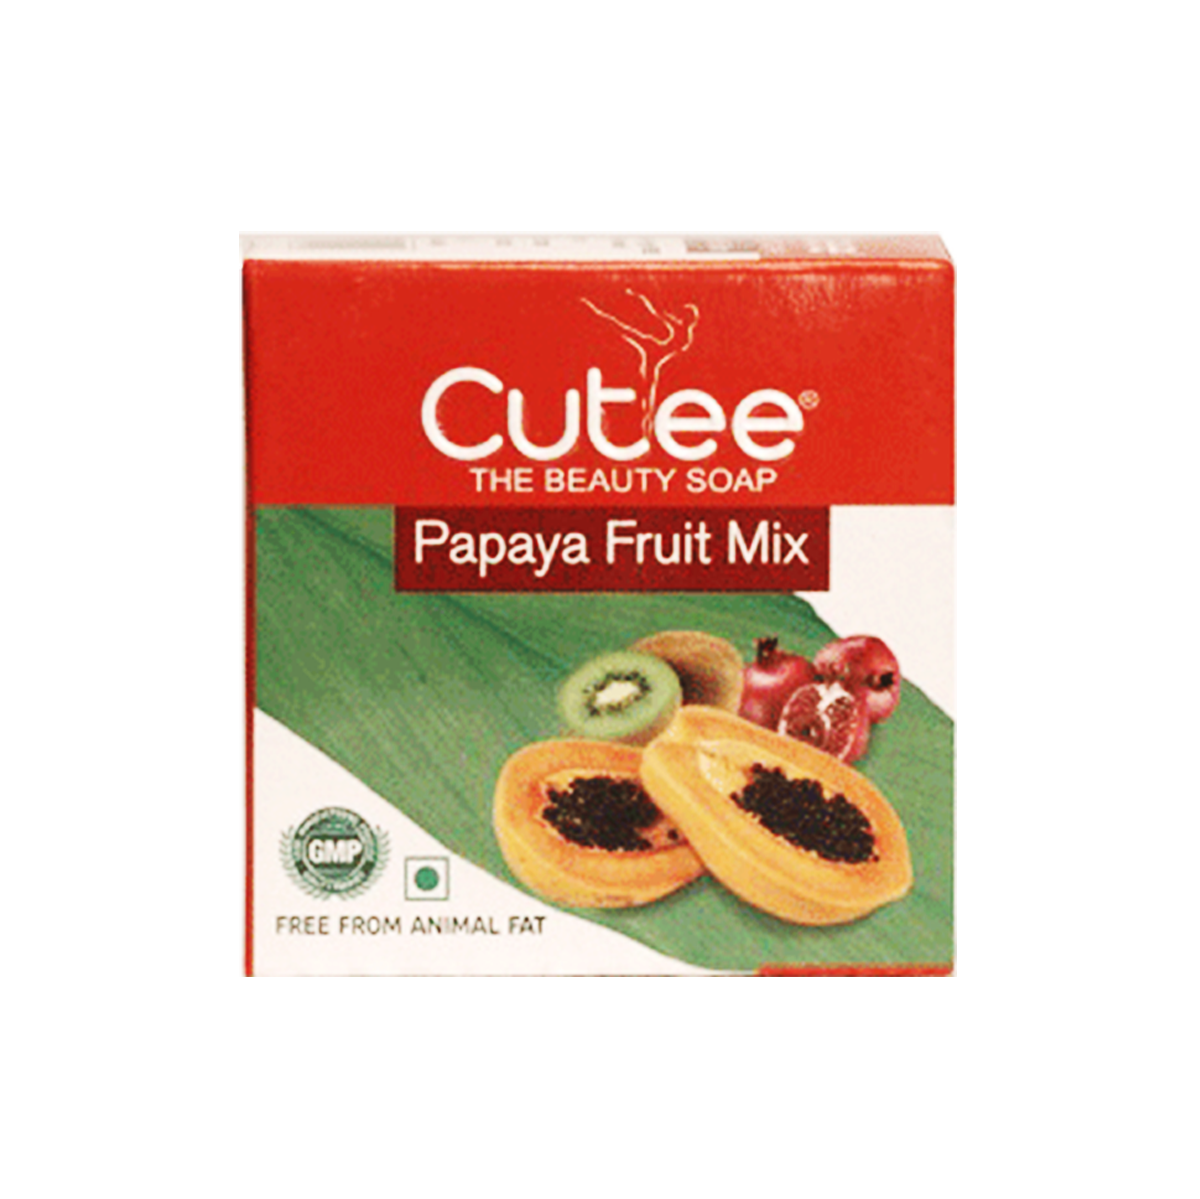 Pappaya Fruit Mix